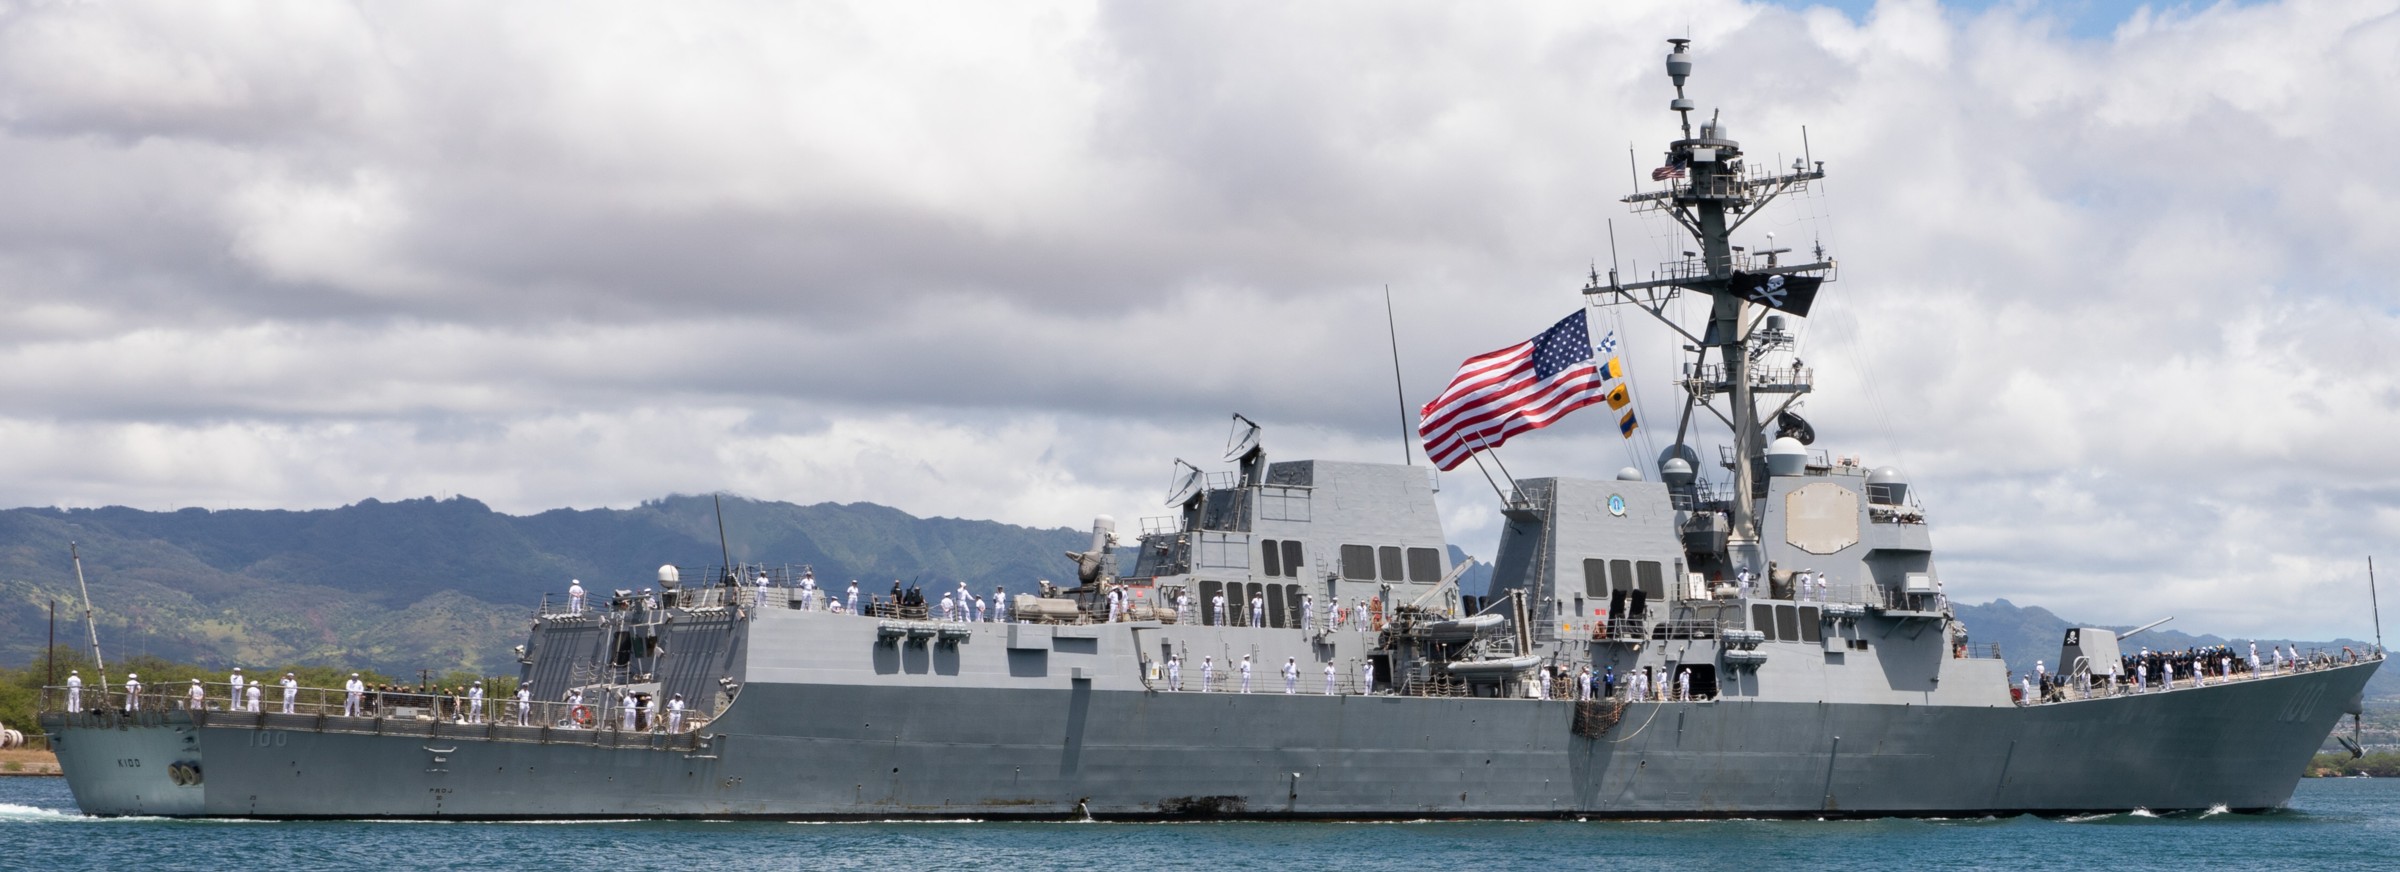 ddg-100 uss kidd arleigh burke class guided missile destroyer pearl harbor hickam hawaii rimpac 2024 70